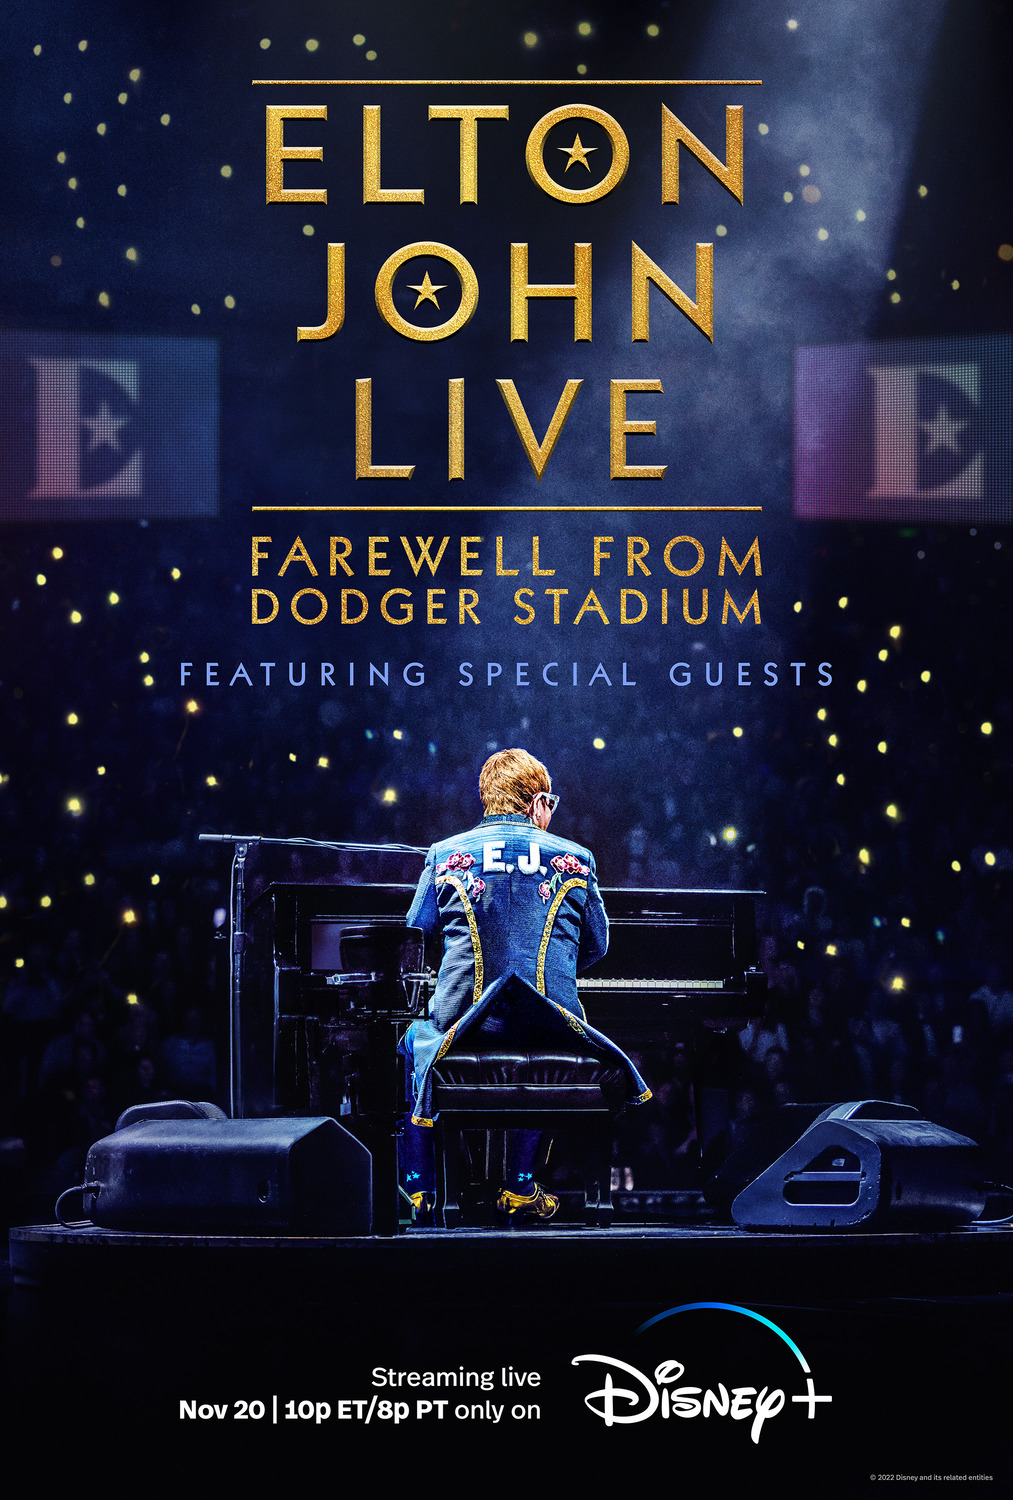 Extra Large TV Poster Image for Elton John Live: Farewell from Dodger Stadium 